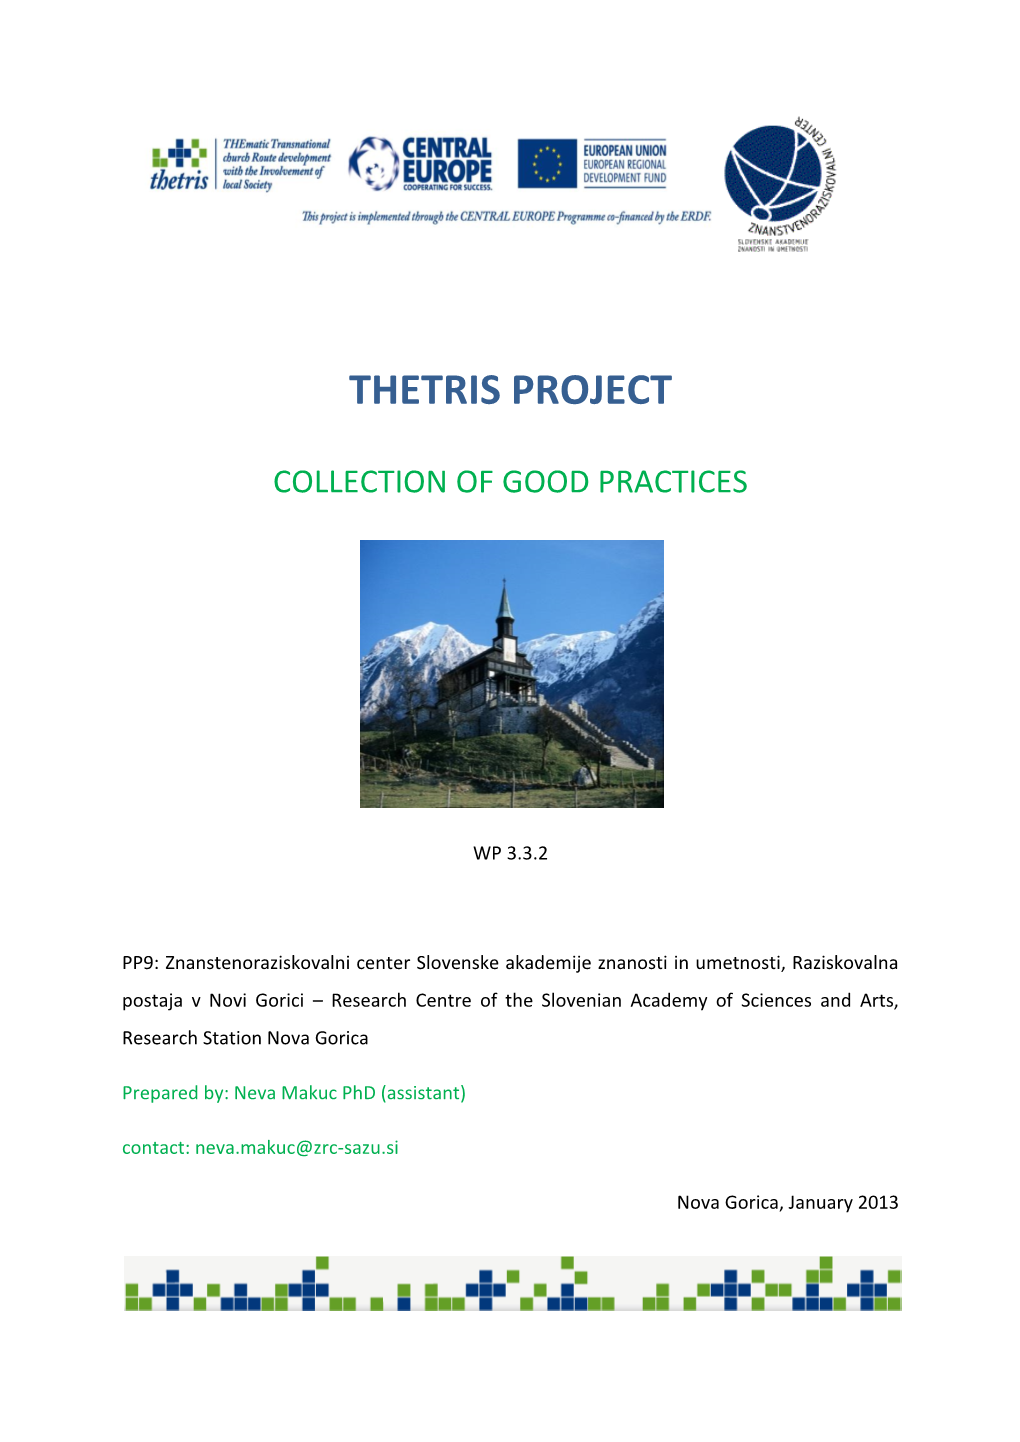 Thetris Project